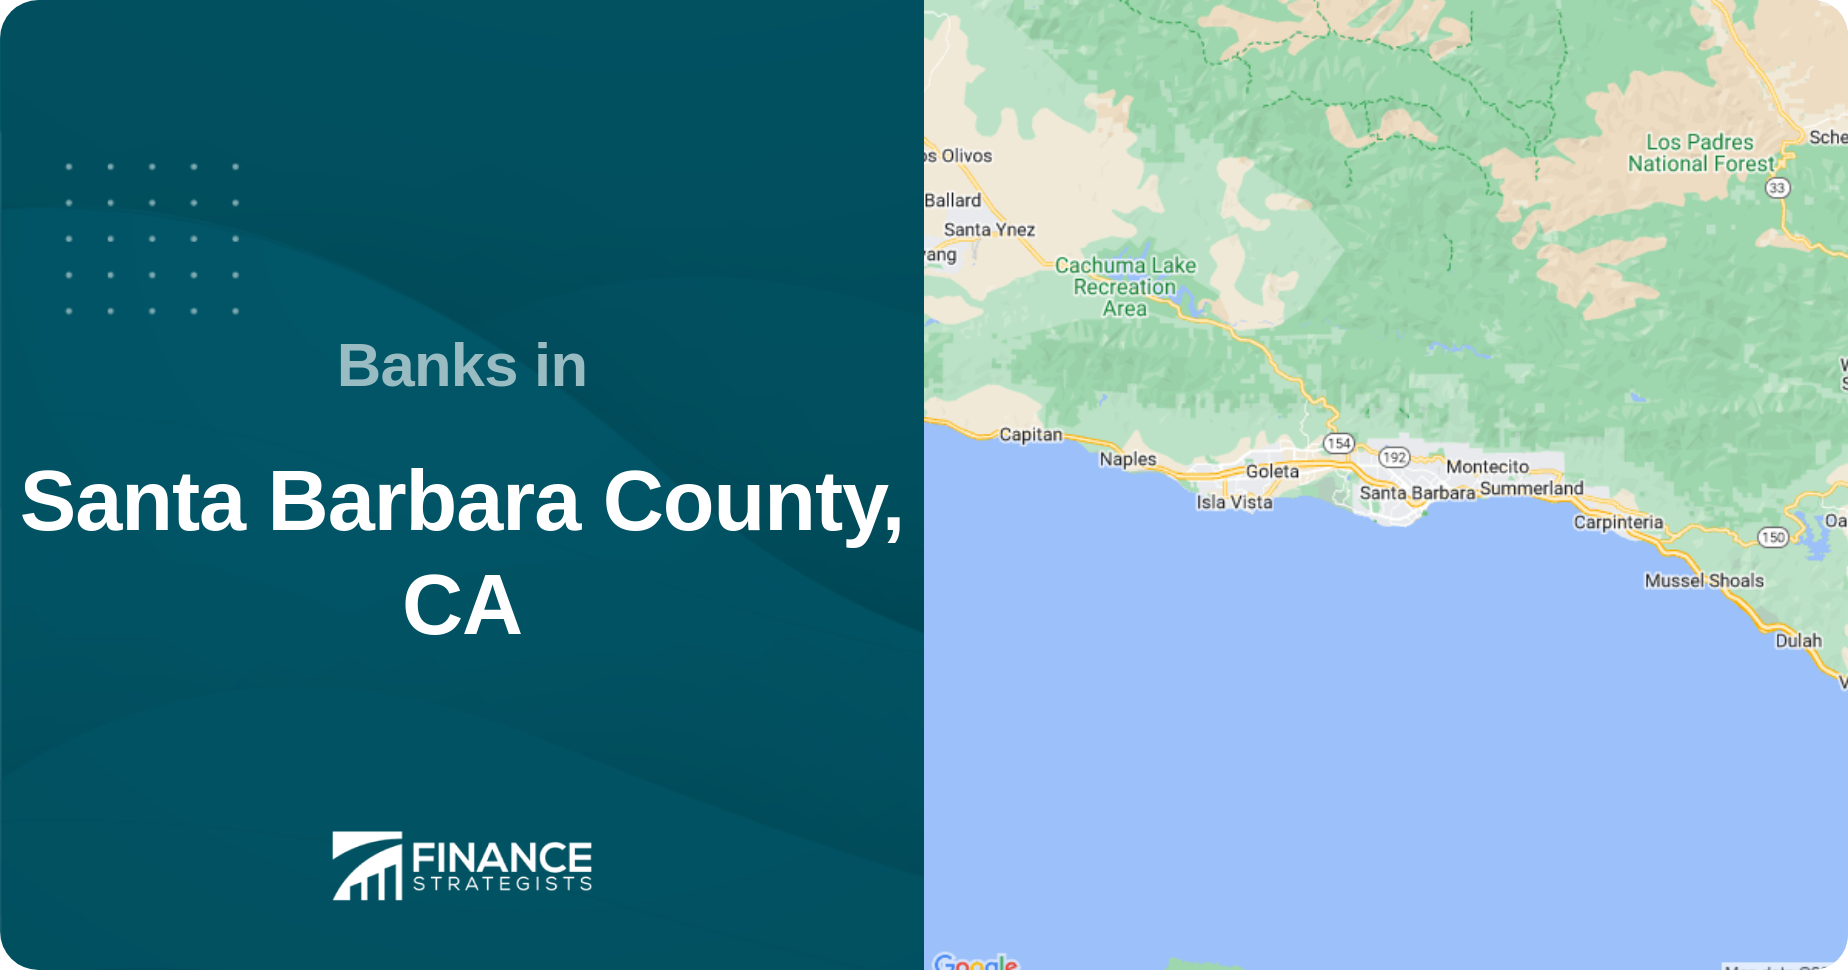 Banks in Santa Barbara County, CA